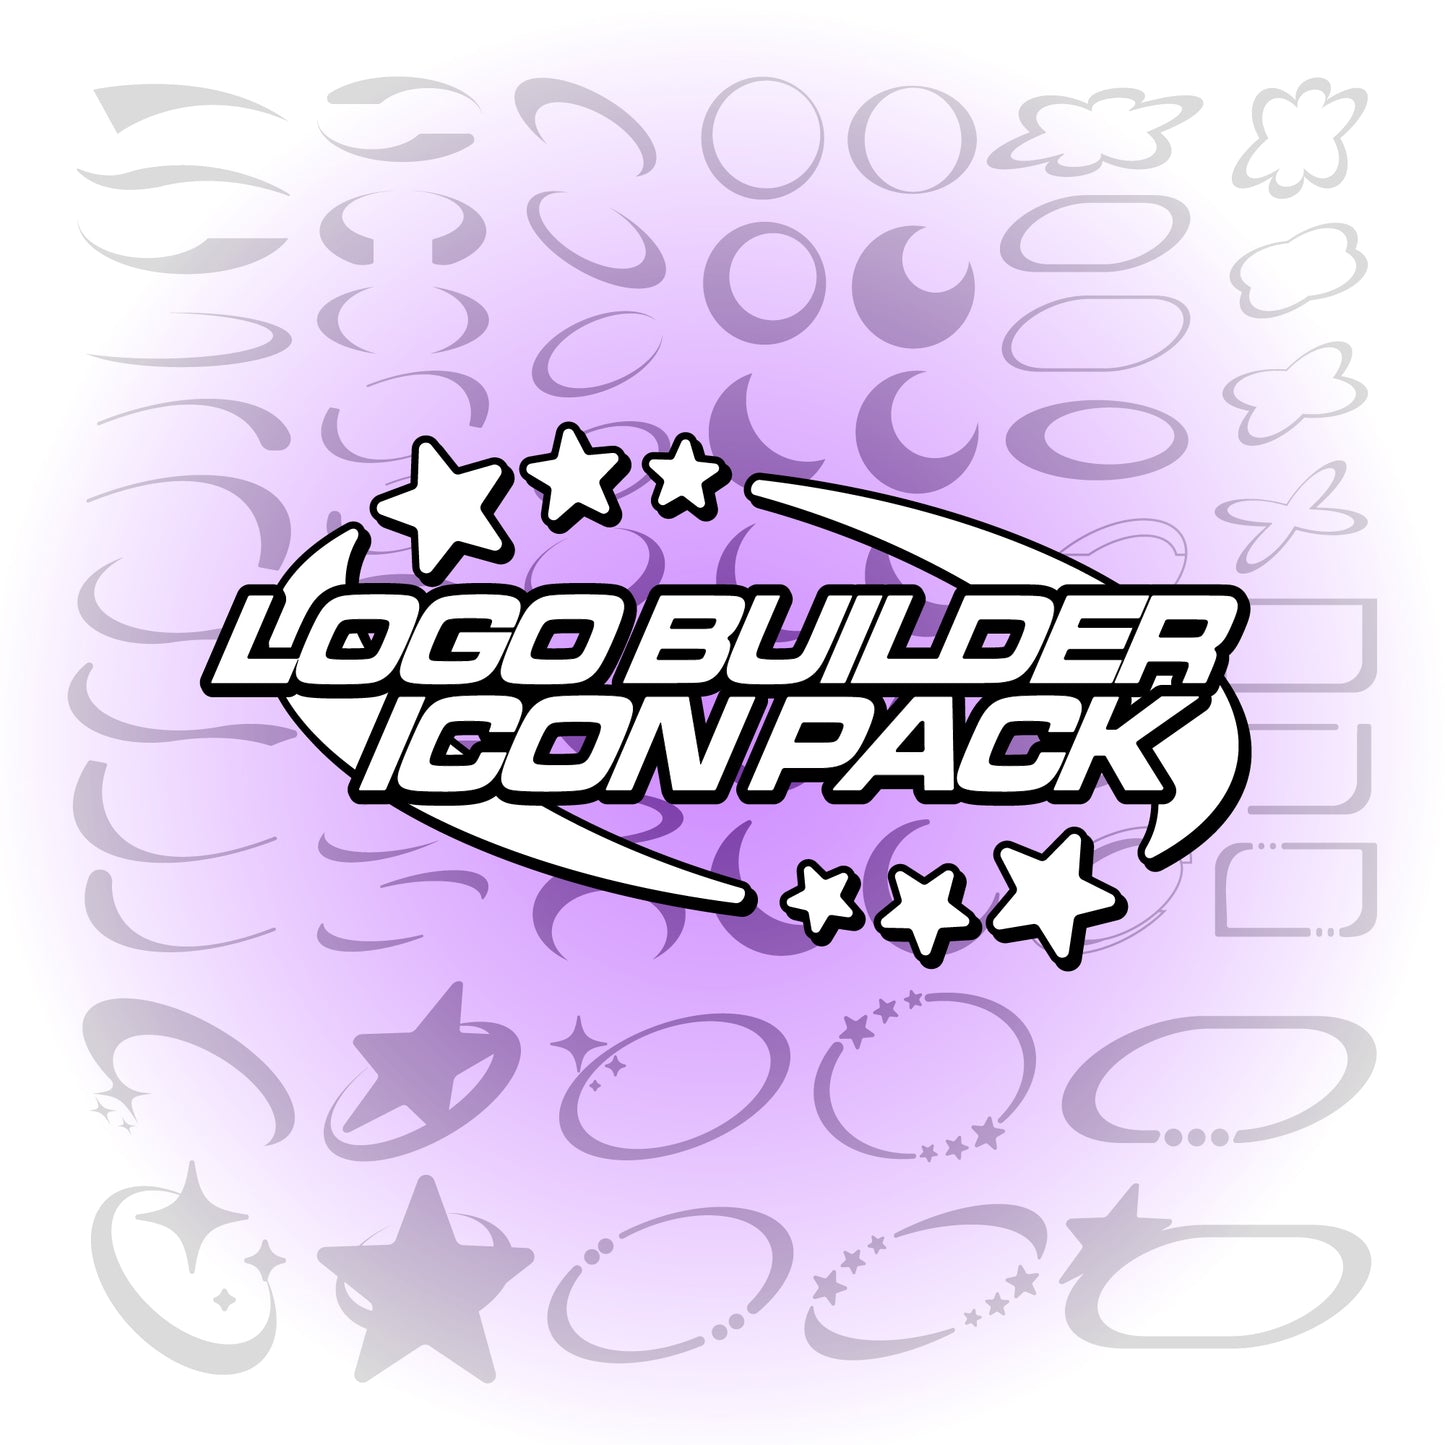 Logo Builder Icon Pack